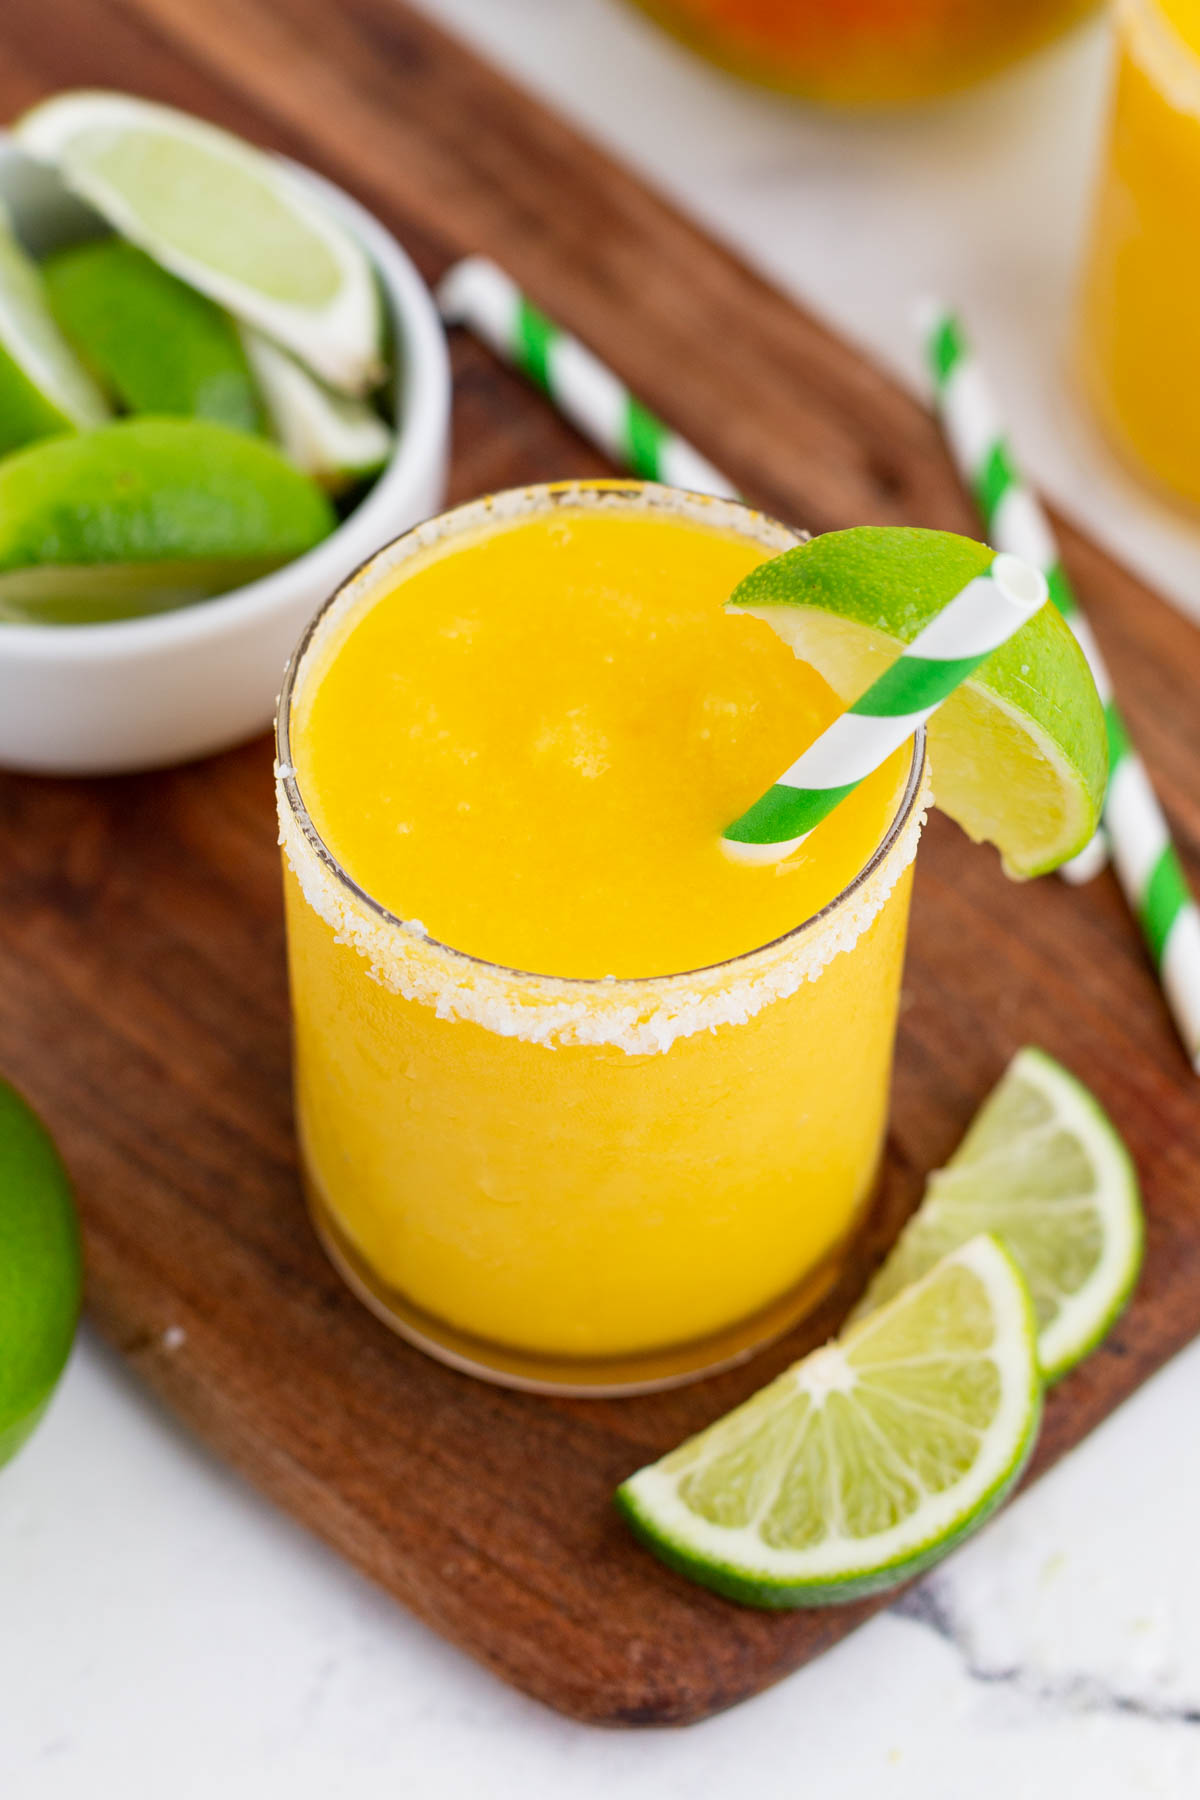 Serve up this mango margarita at a Cinco de Mayo party.